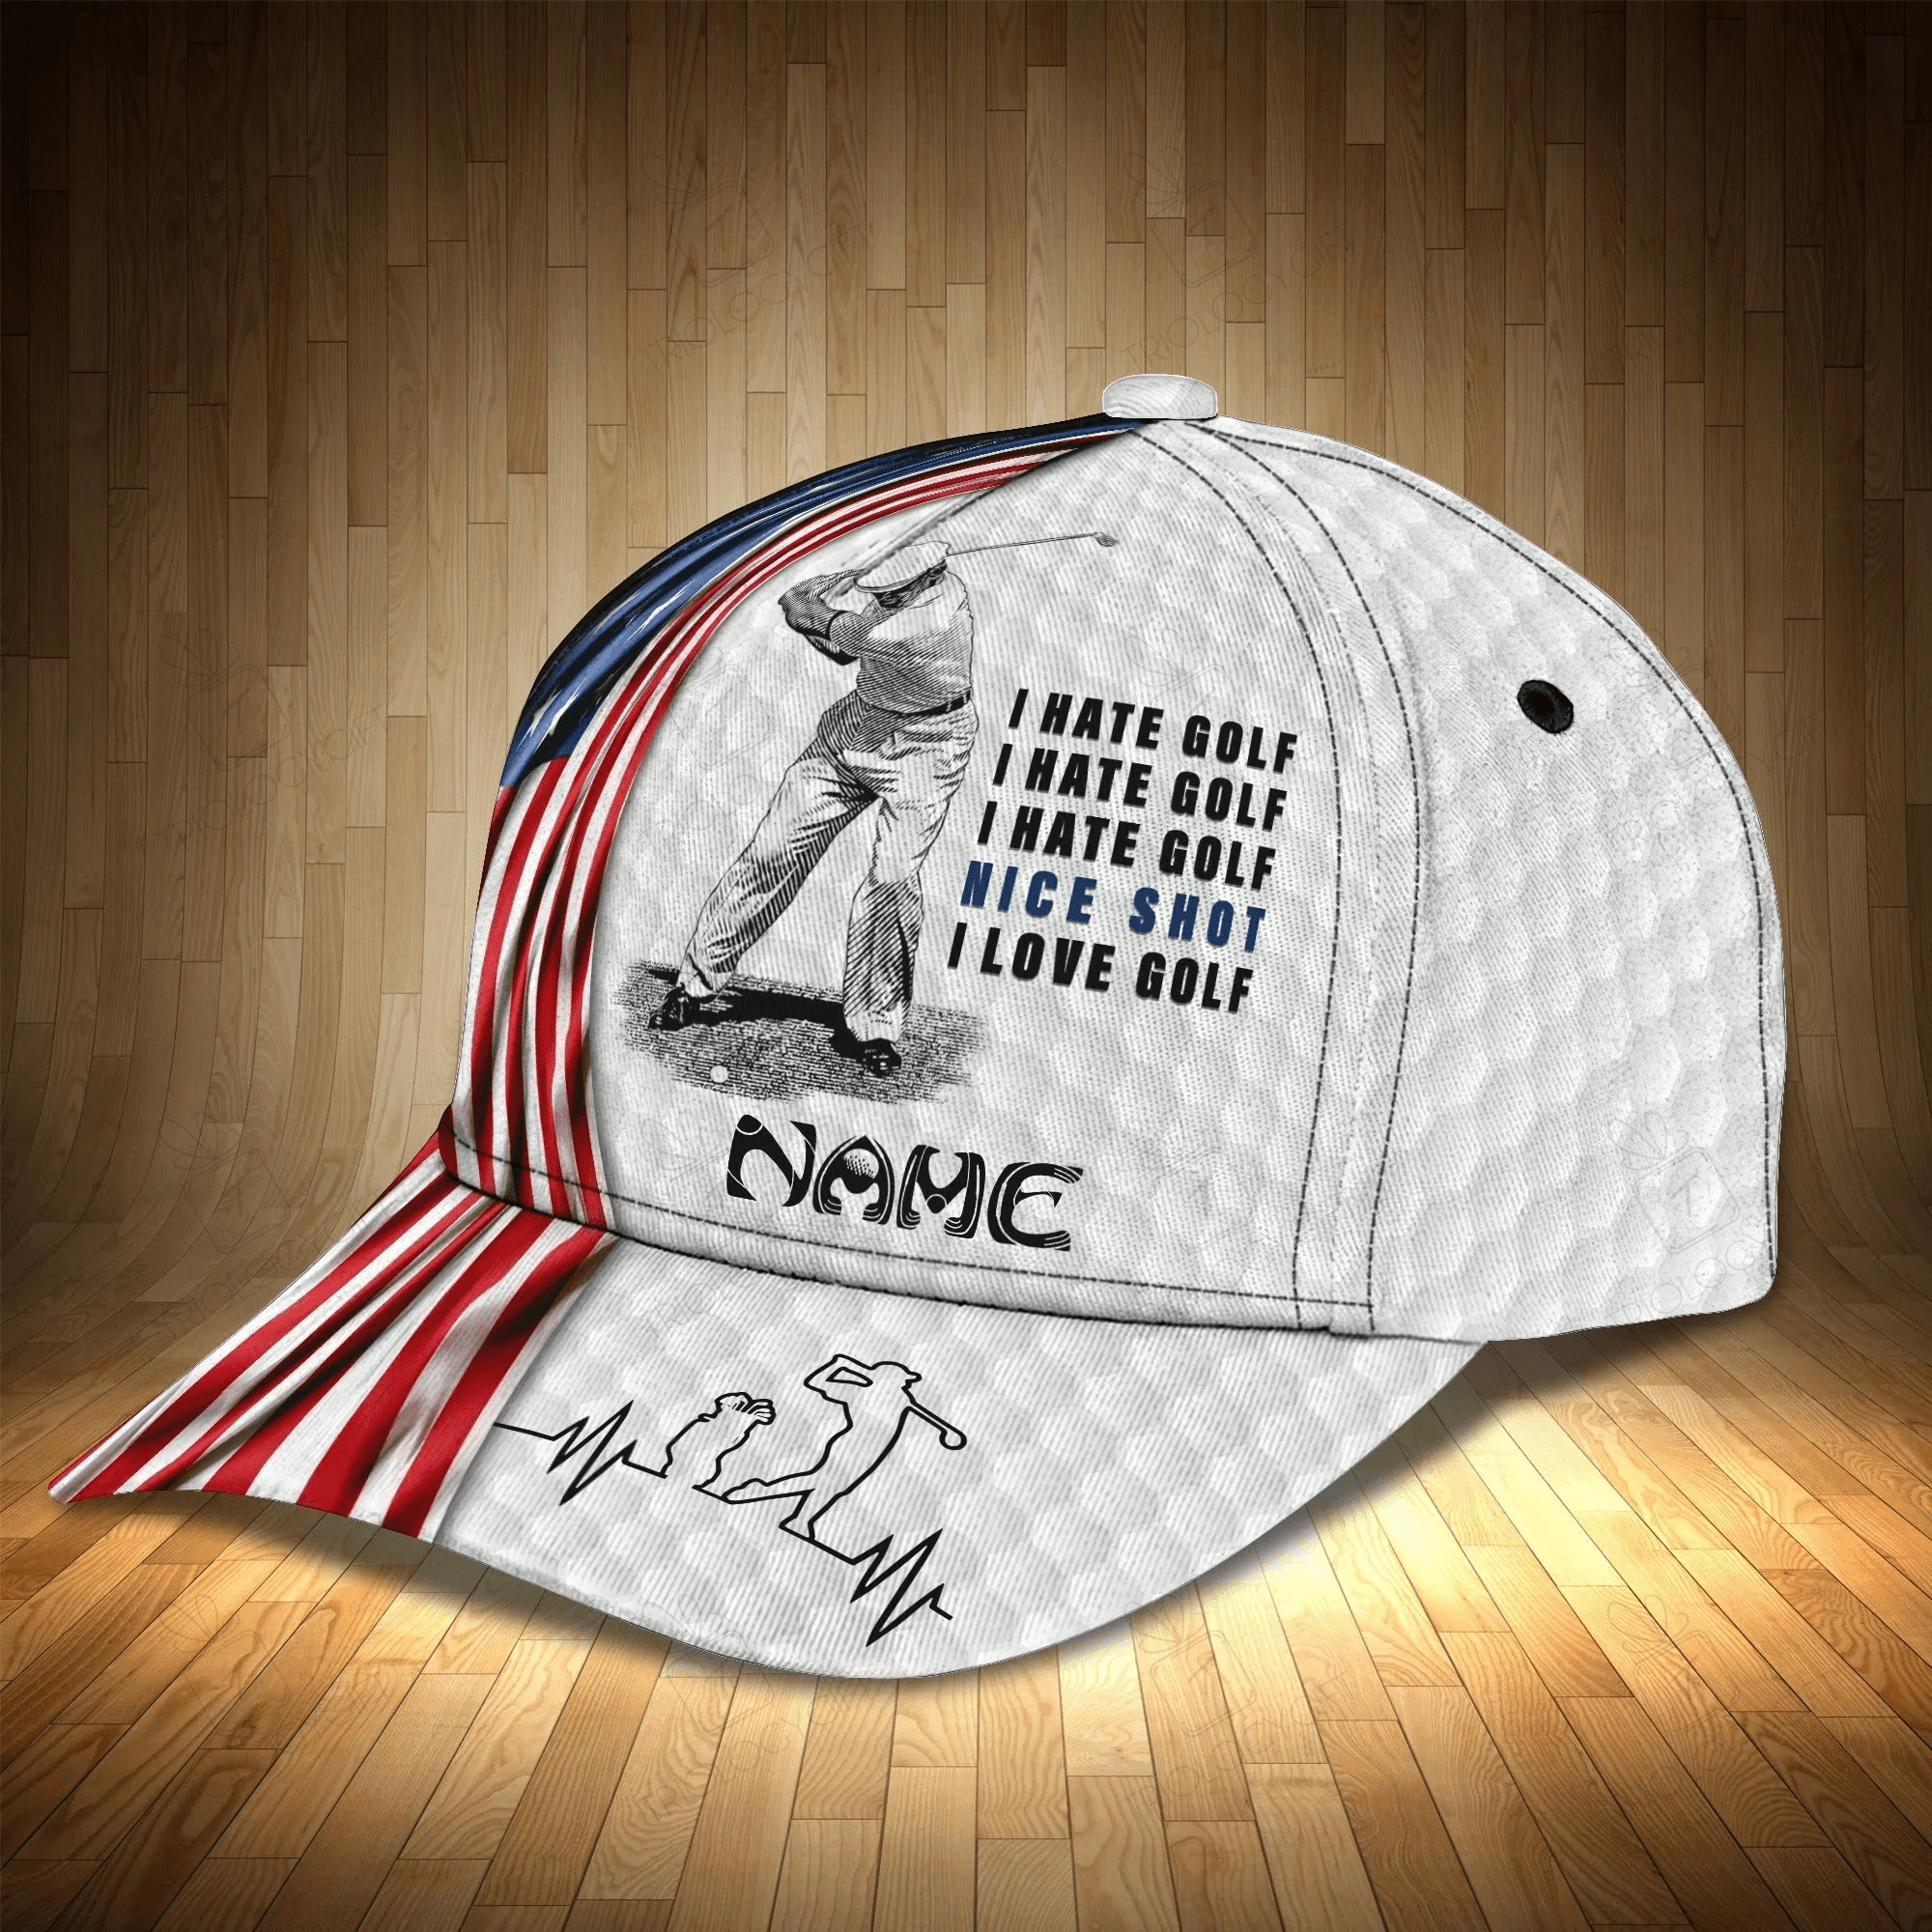 Customized 3D Full Printed Mens Golf Cap, Classic 3D Cap For Golfer, Nice Short I Love Golf Hat, Golf Cap